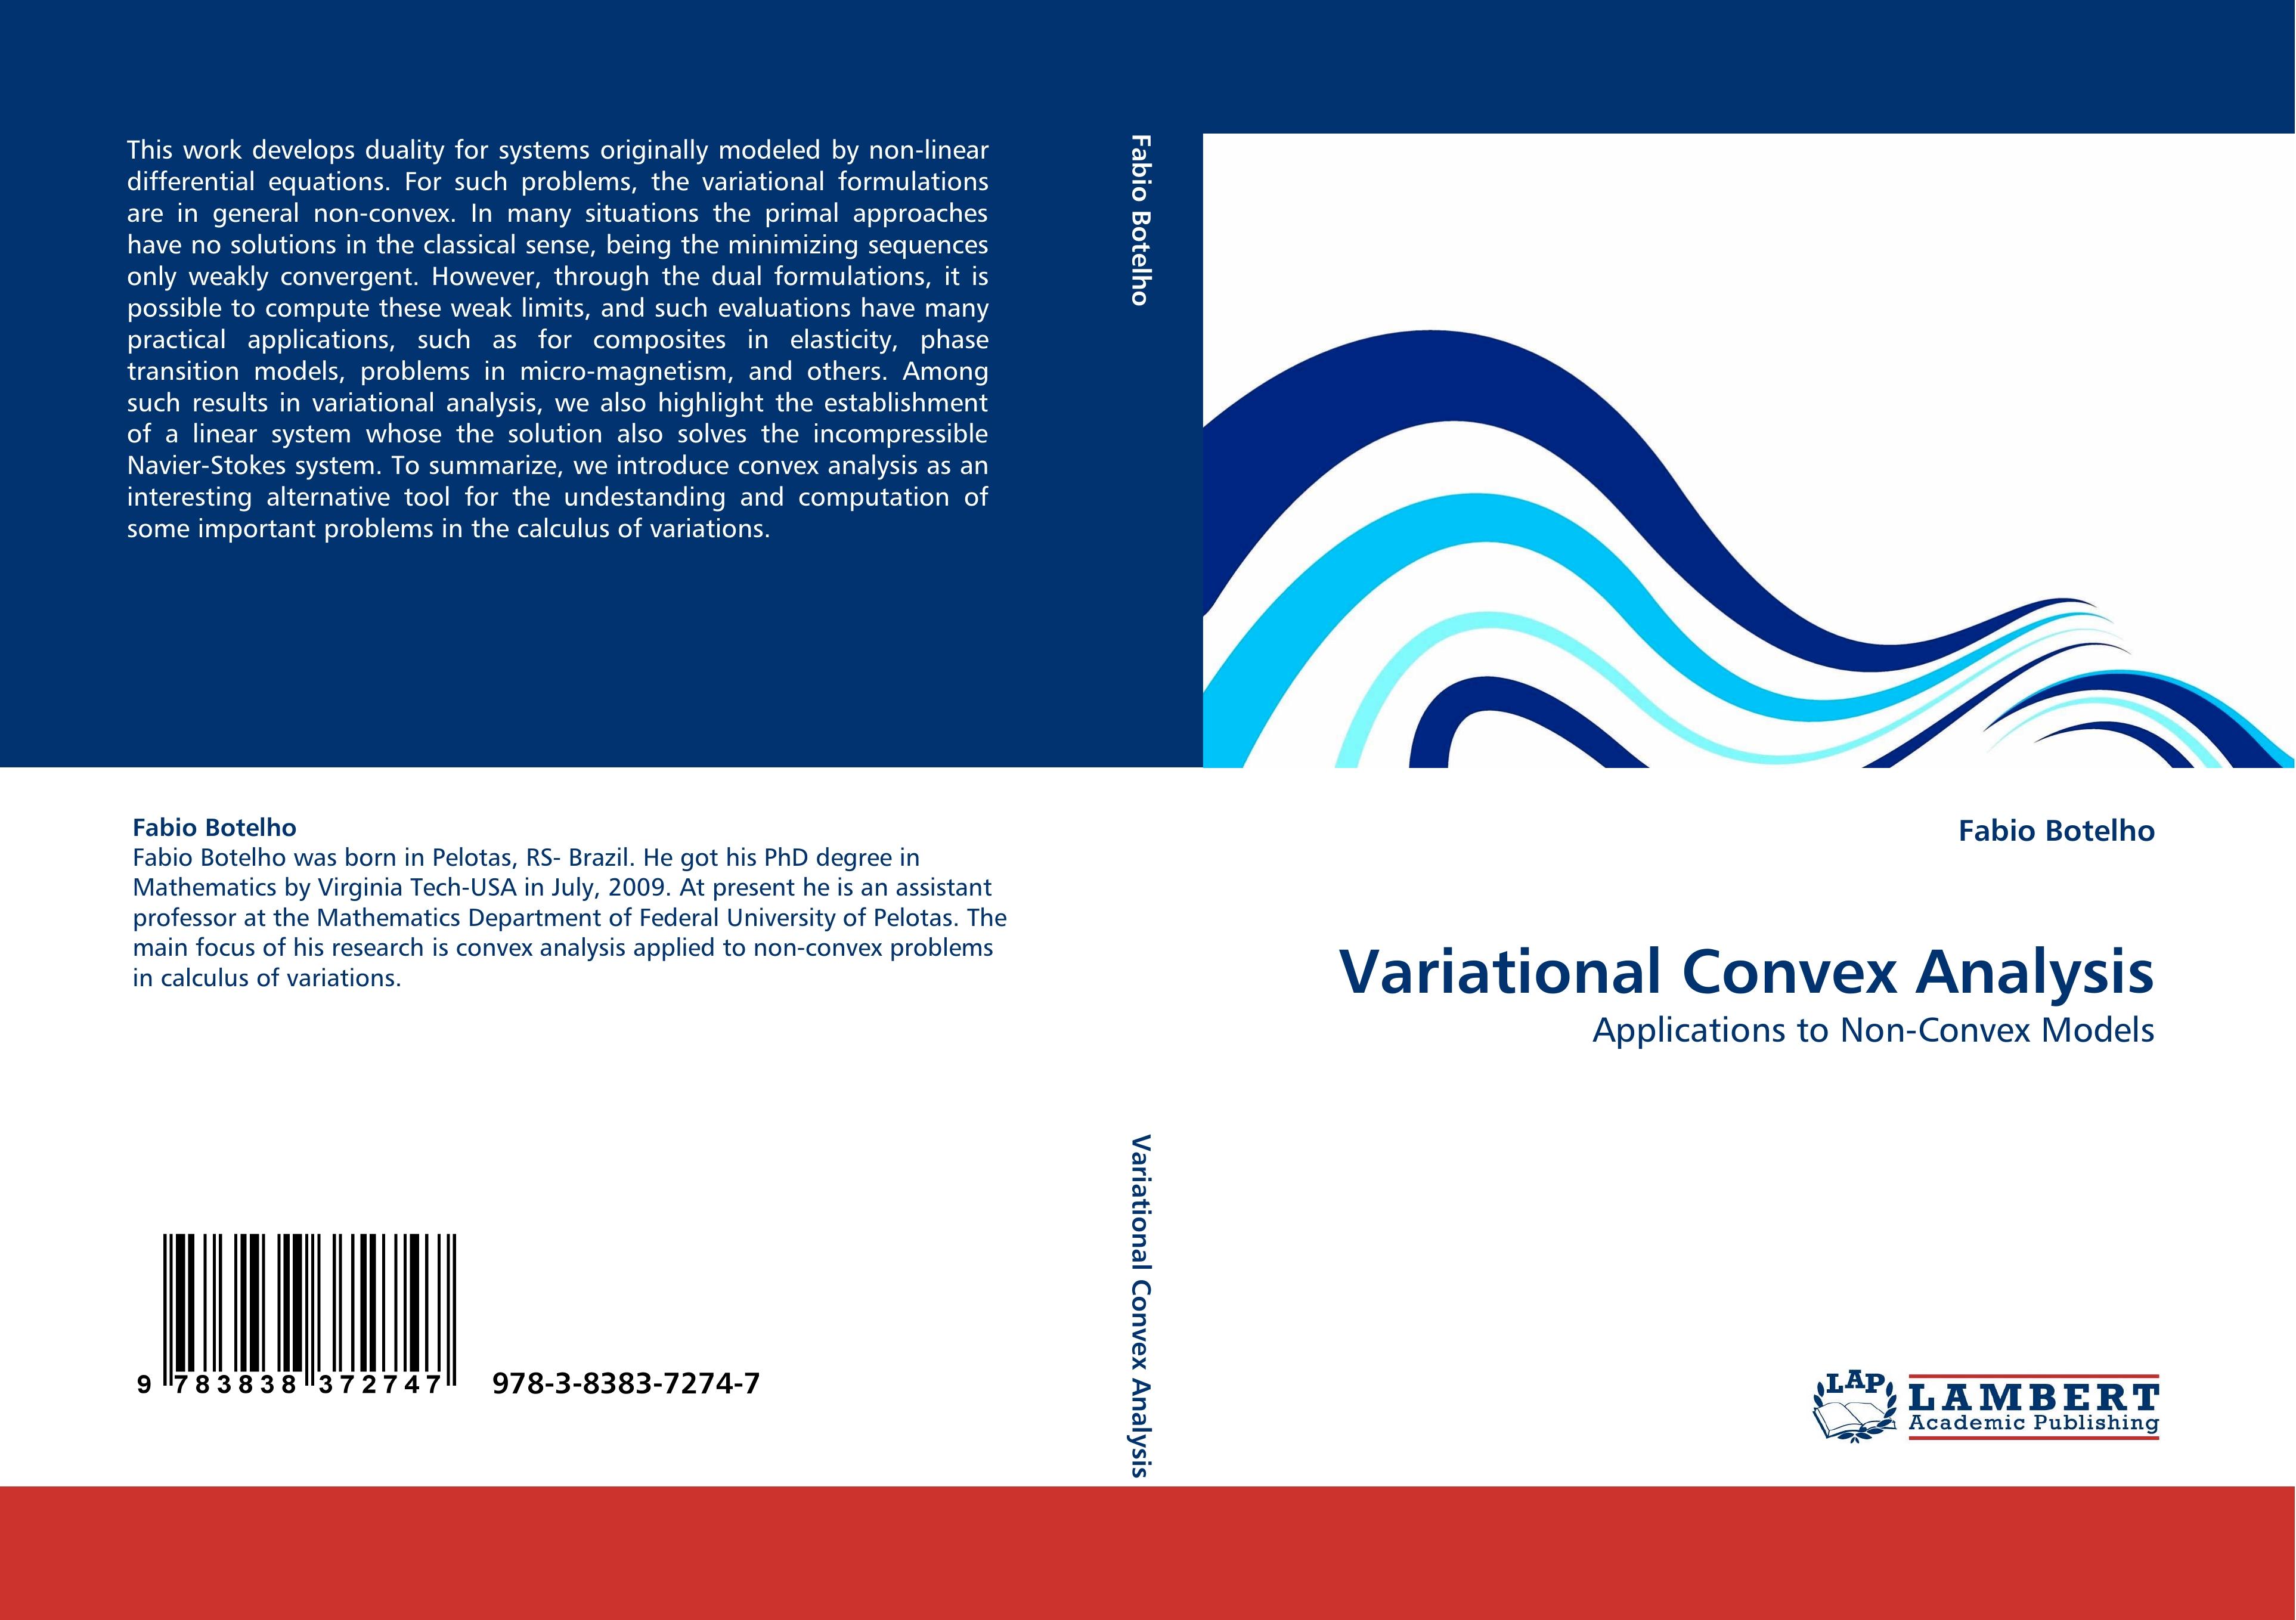 Variational Convex Analysis - Fabio Botelho